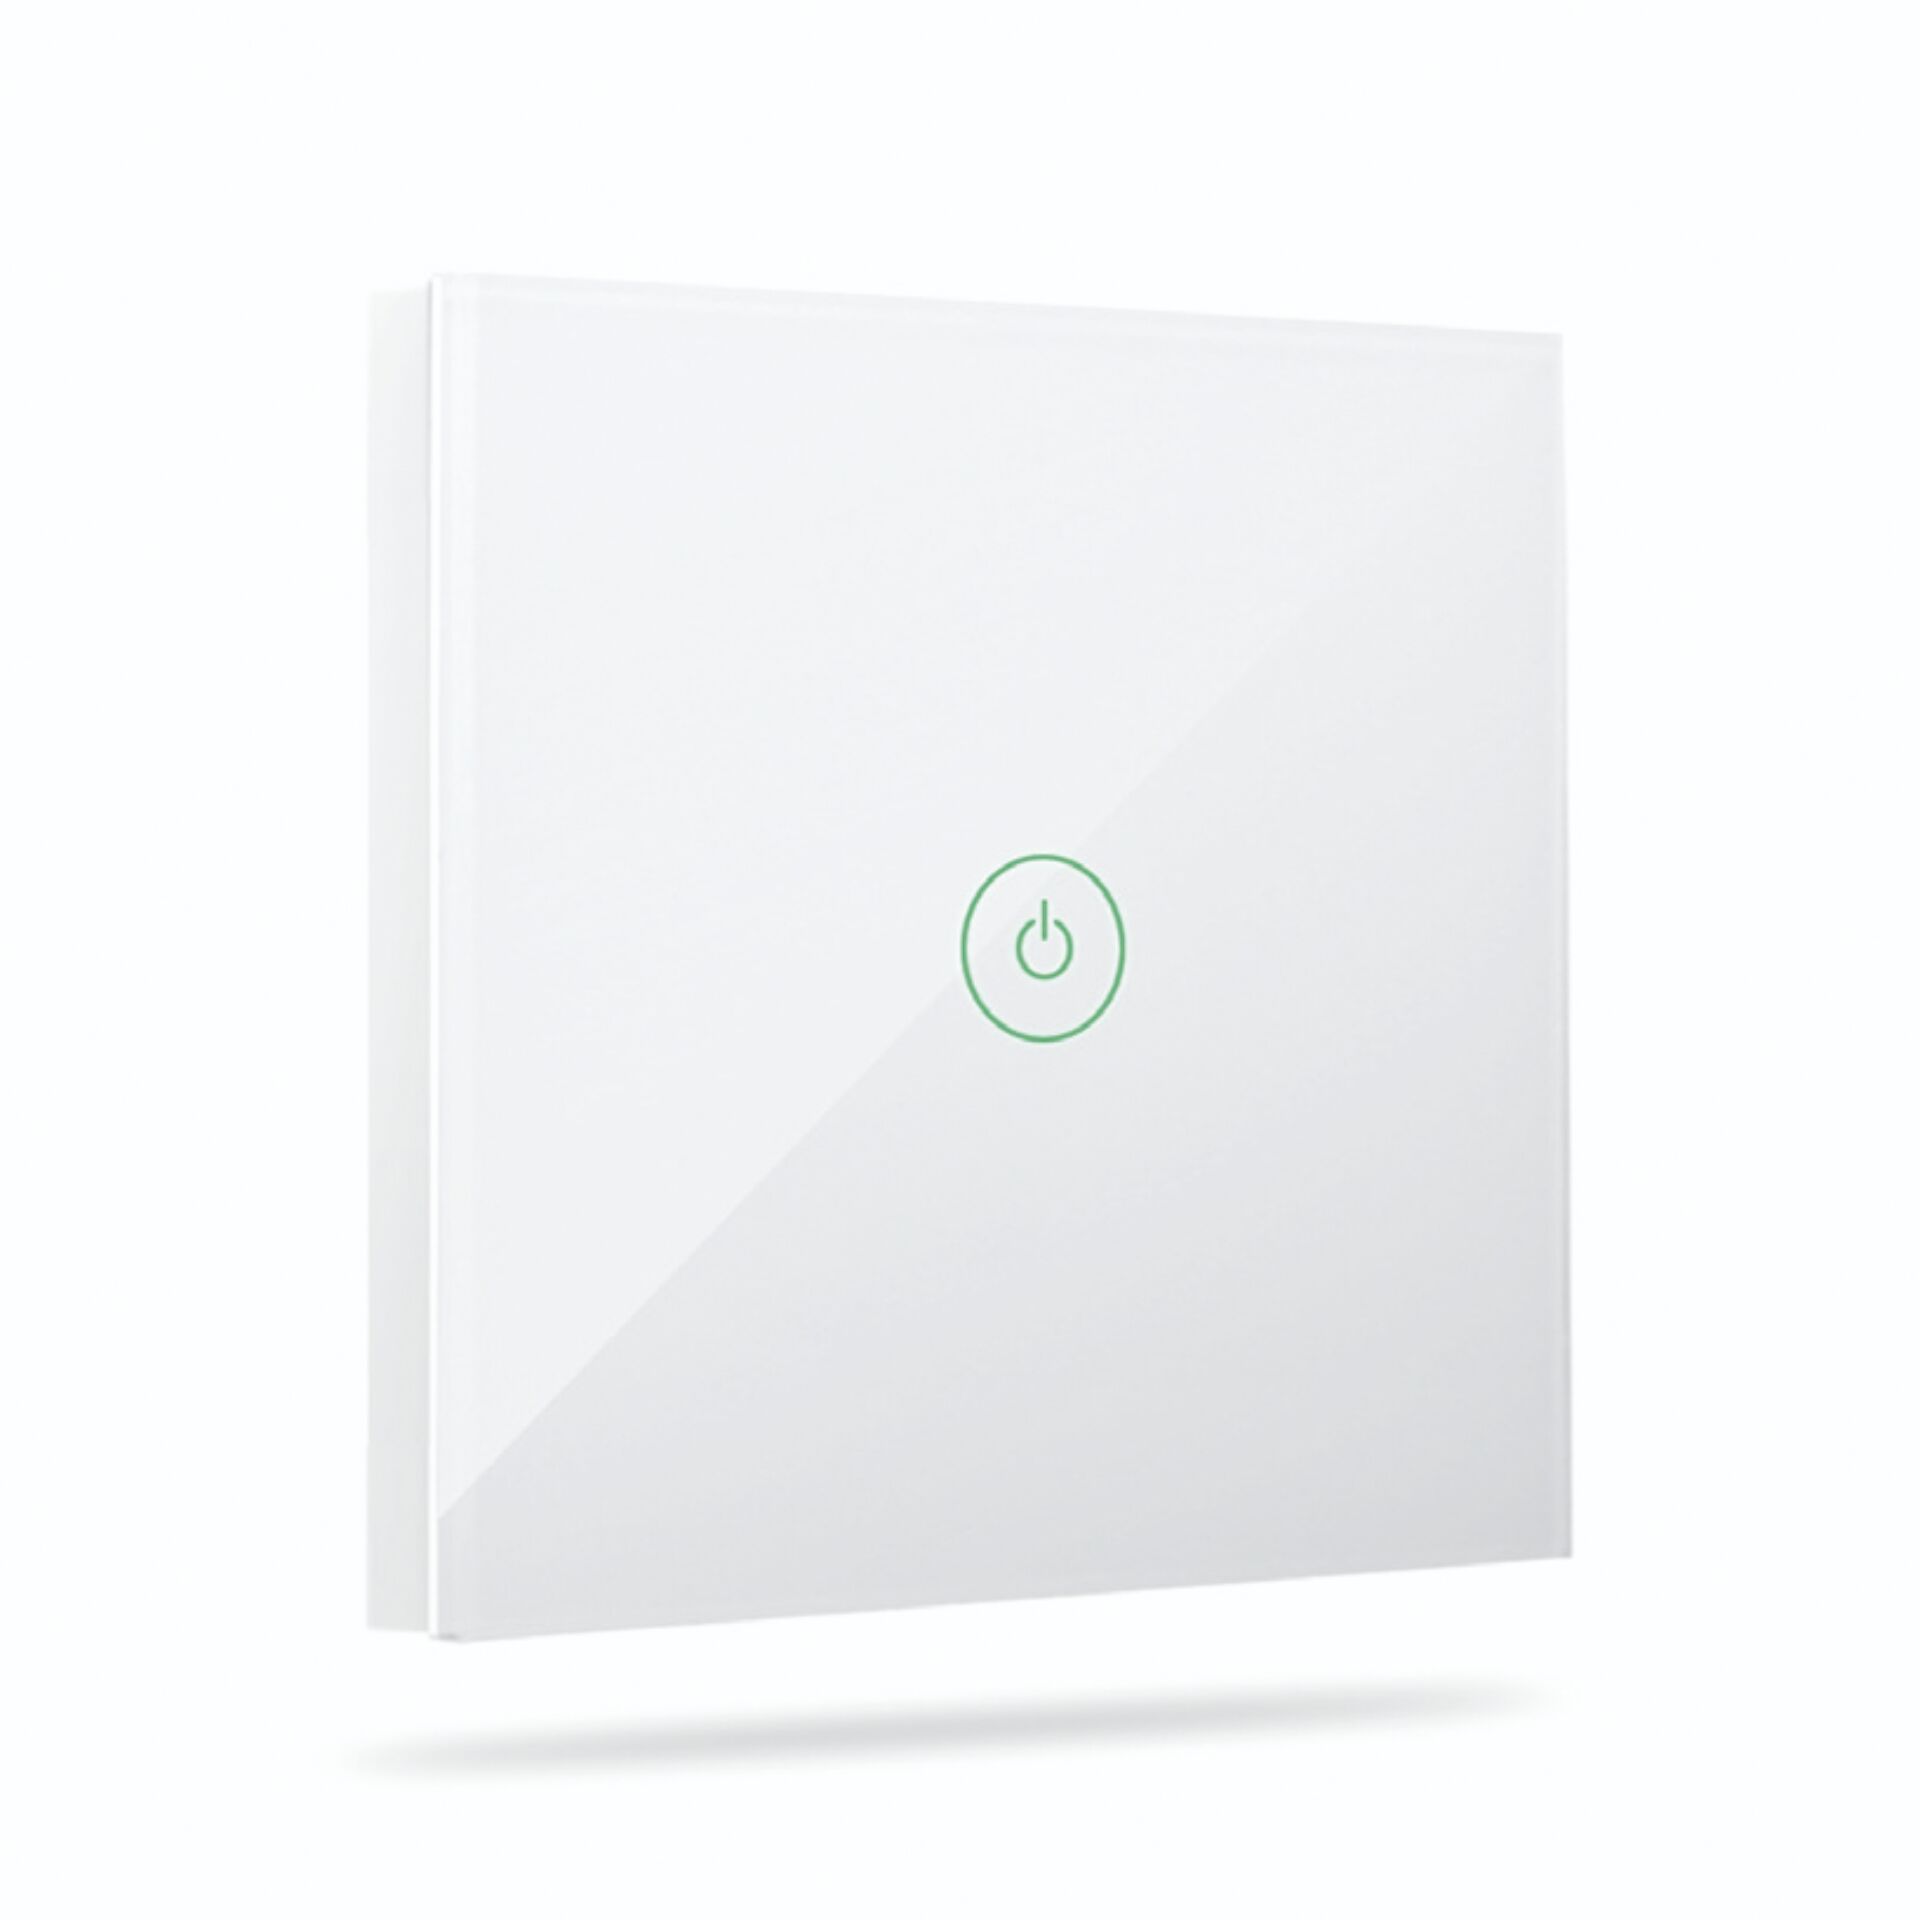 Meross Smart Wi-Fi 1 Way Wall Switch - Physical Button